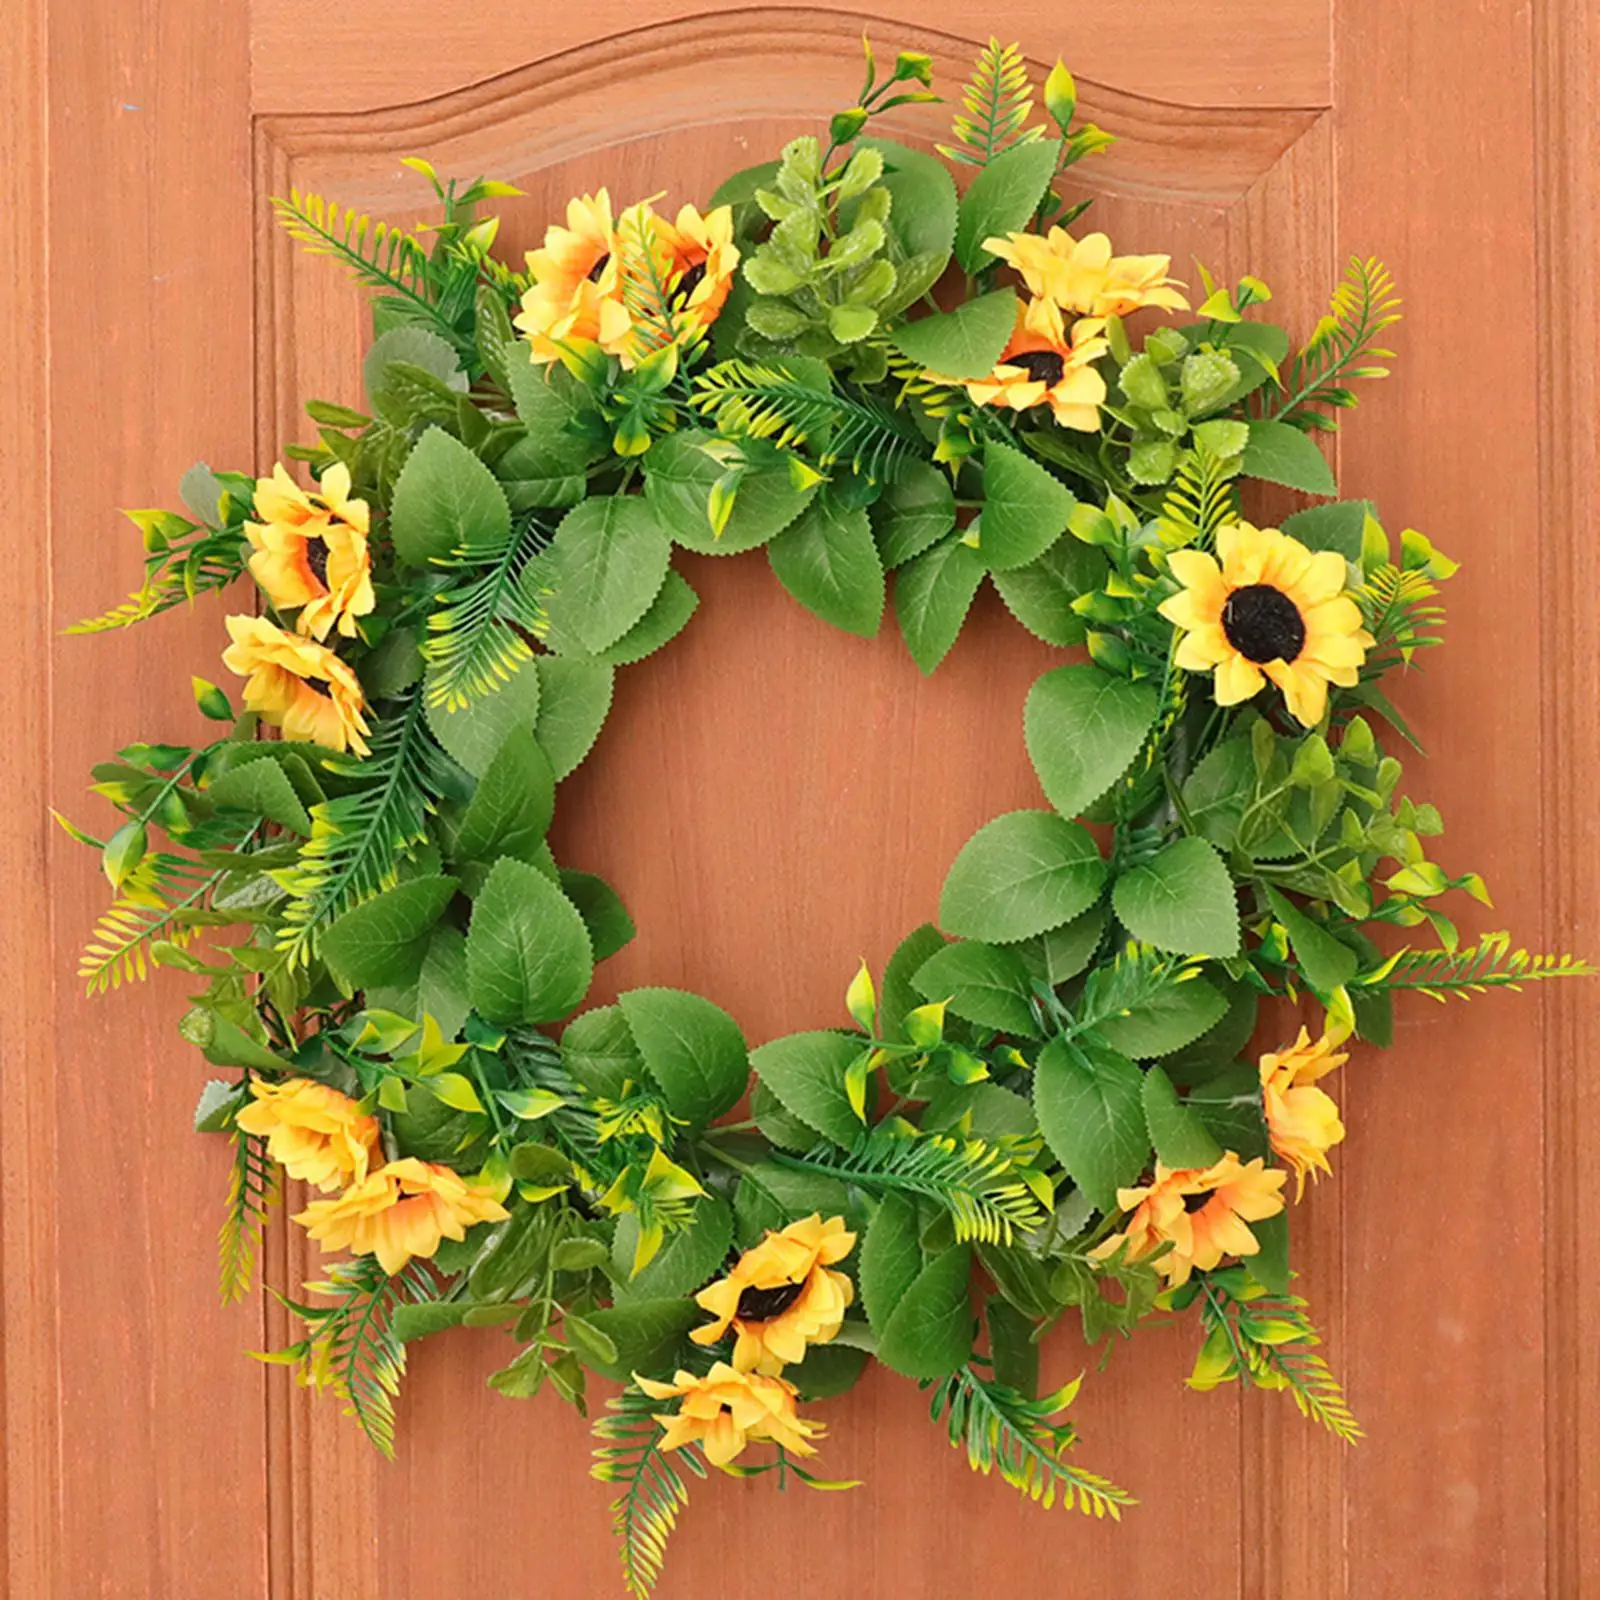 Artificial Vivid Door Wreath Silk Flower Garland Simulation Flowers Ornaments for Xmas Home Decor Front Door Wedding Gift